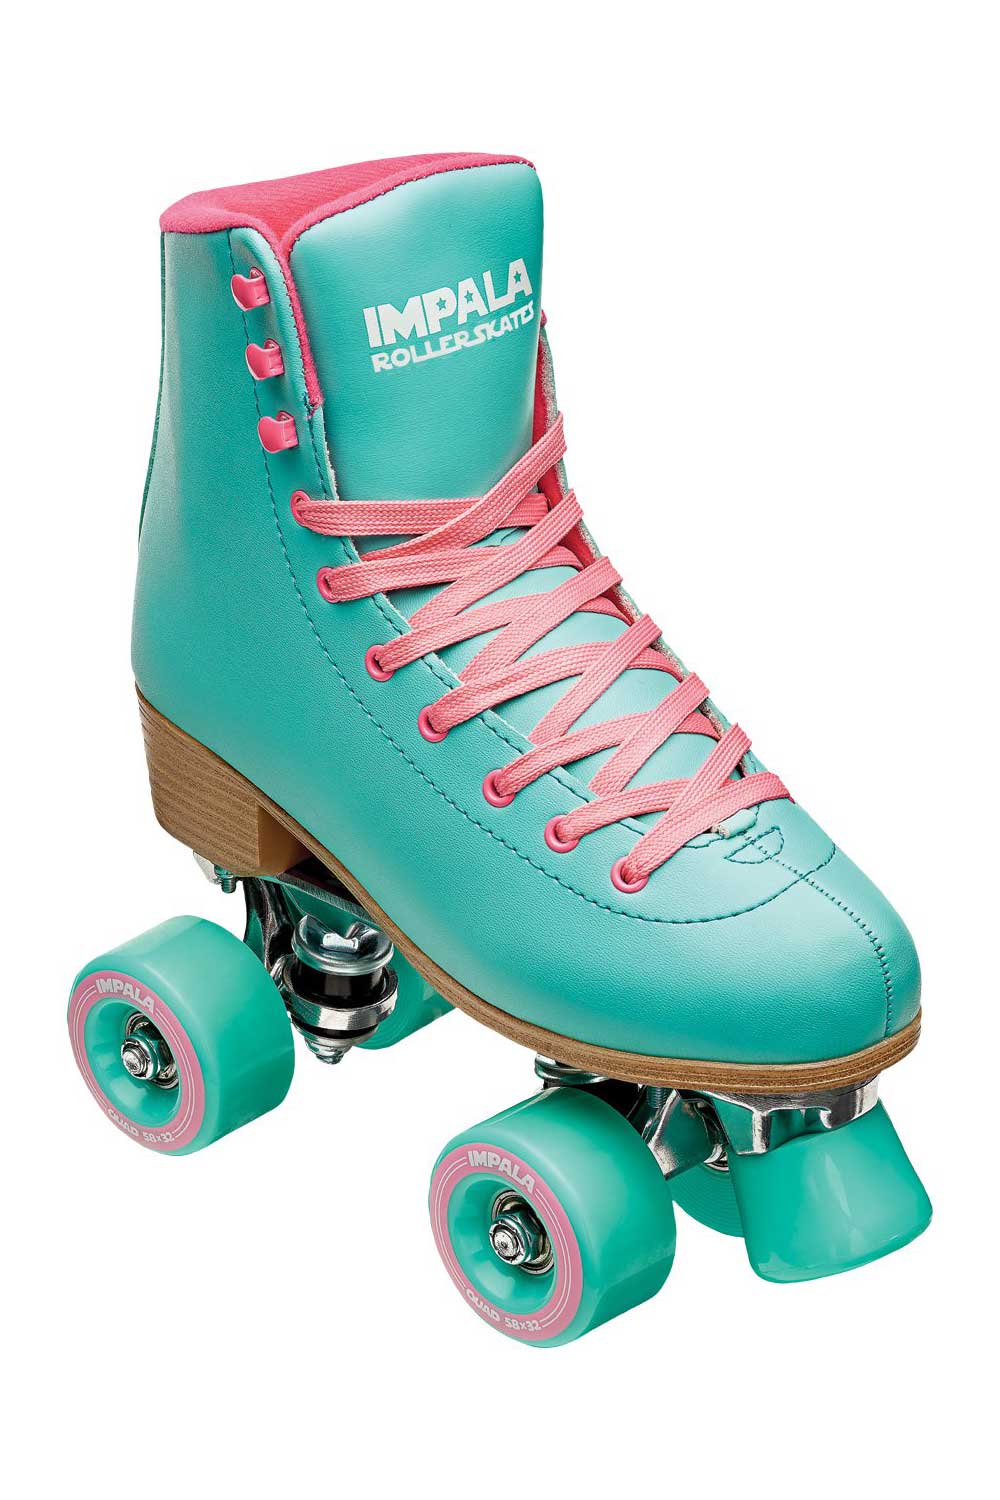 Impala Roller Skates - Aqua